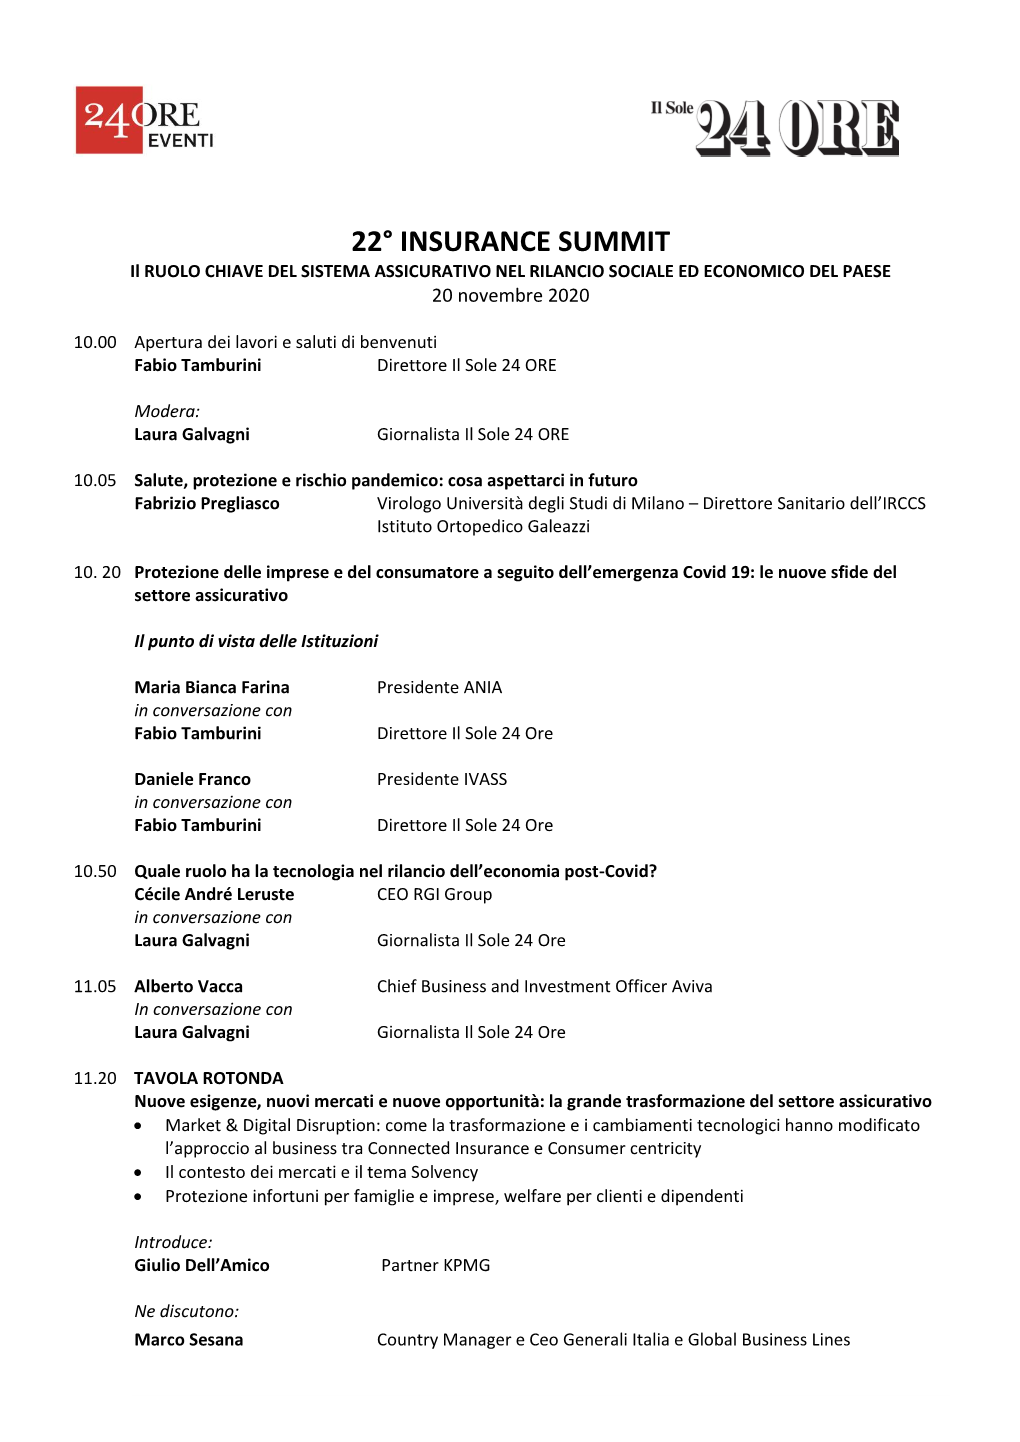 Insurance Summit 2020